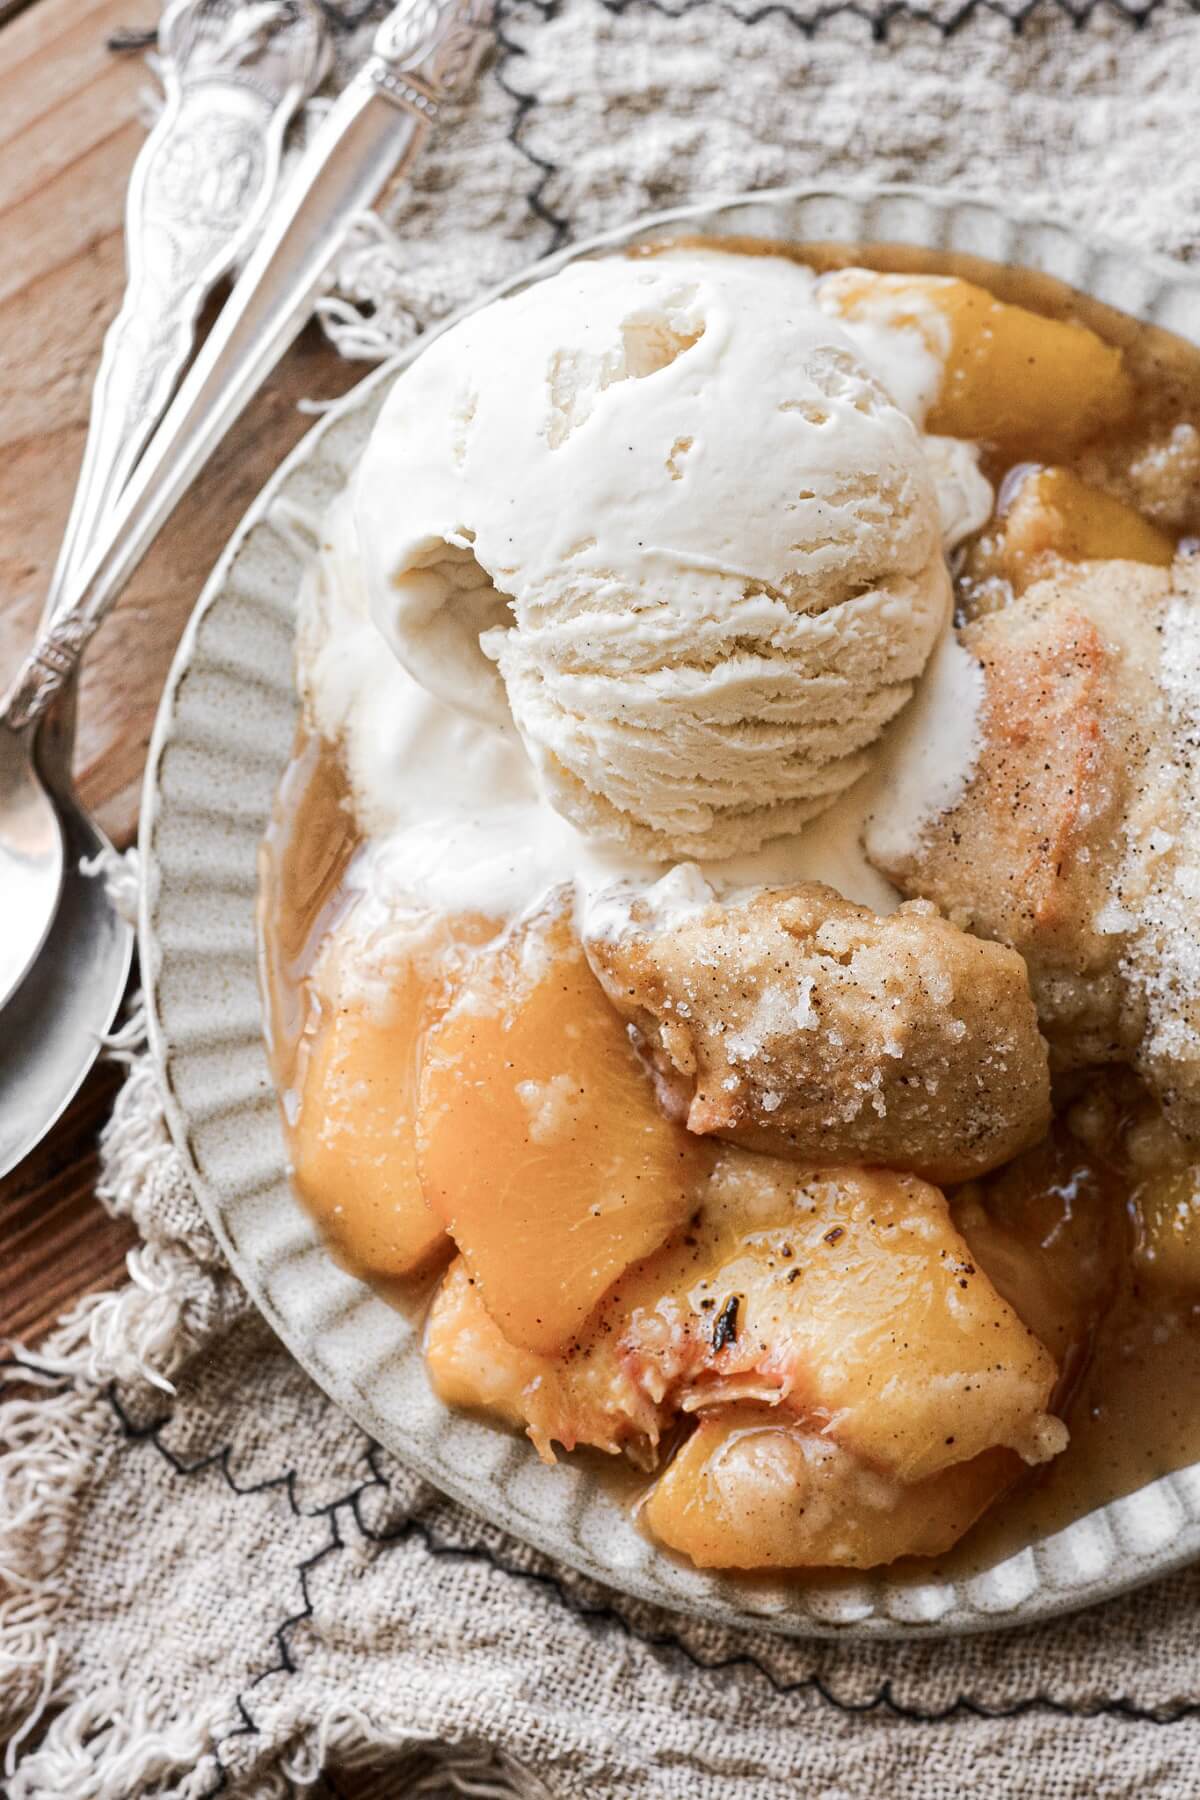 Peach cobbler with vanilla ice cream.